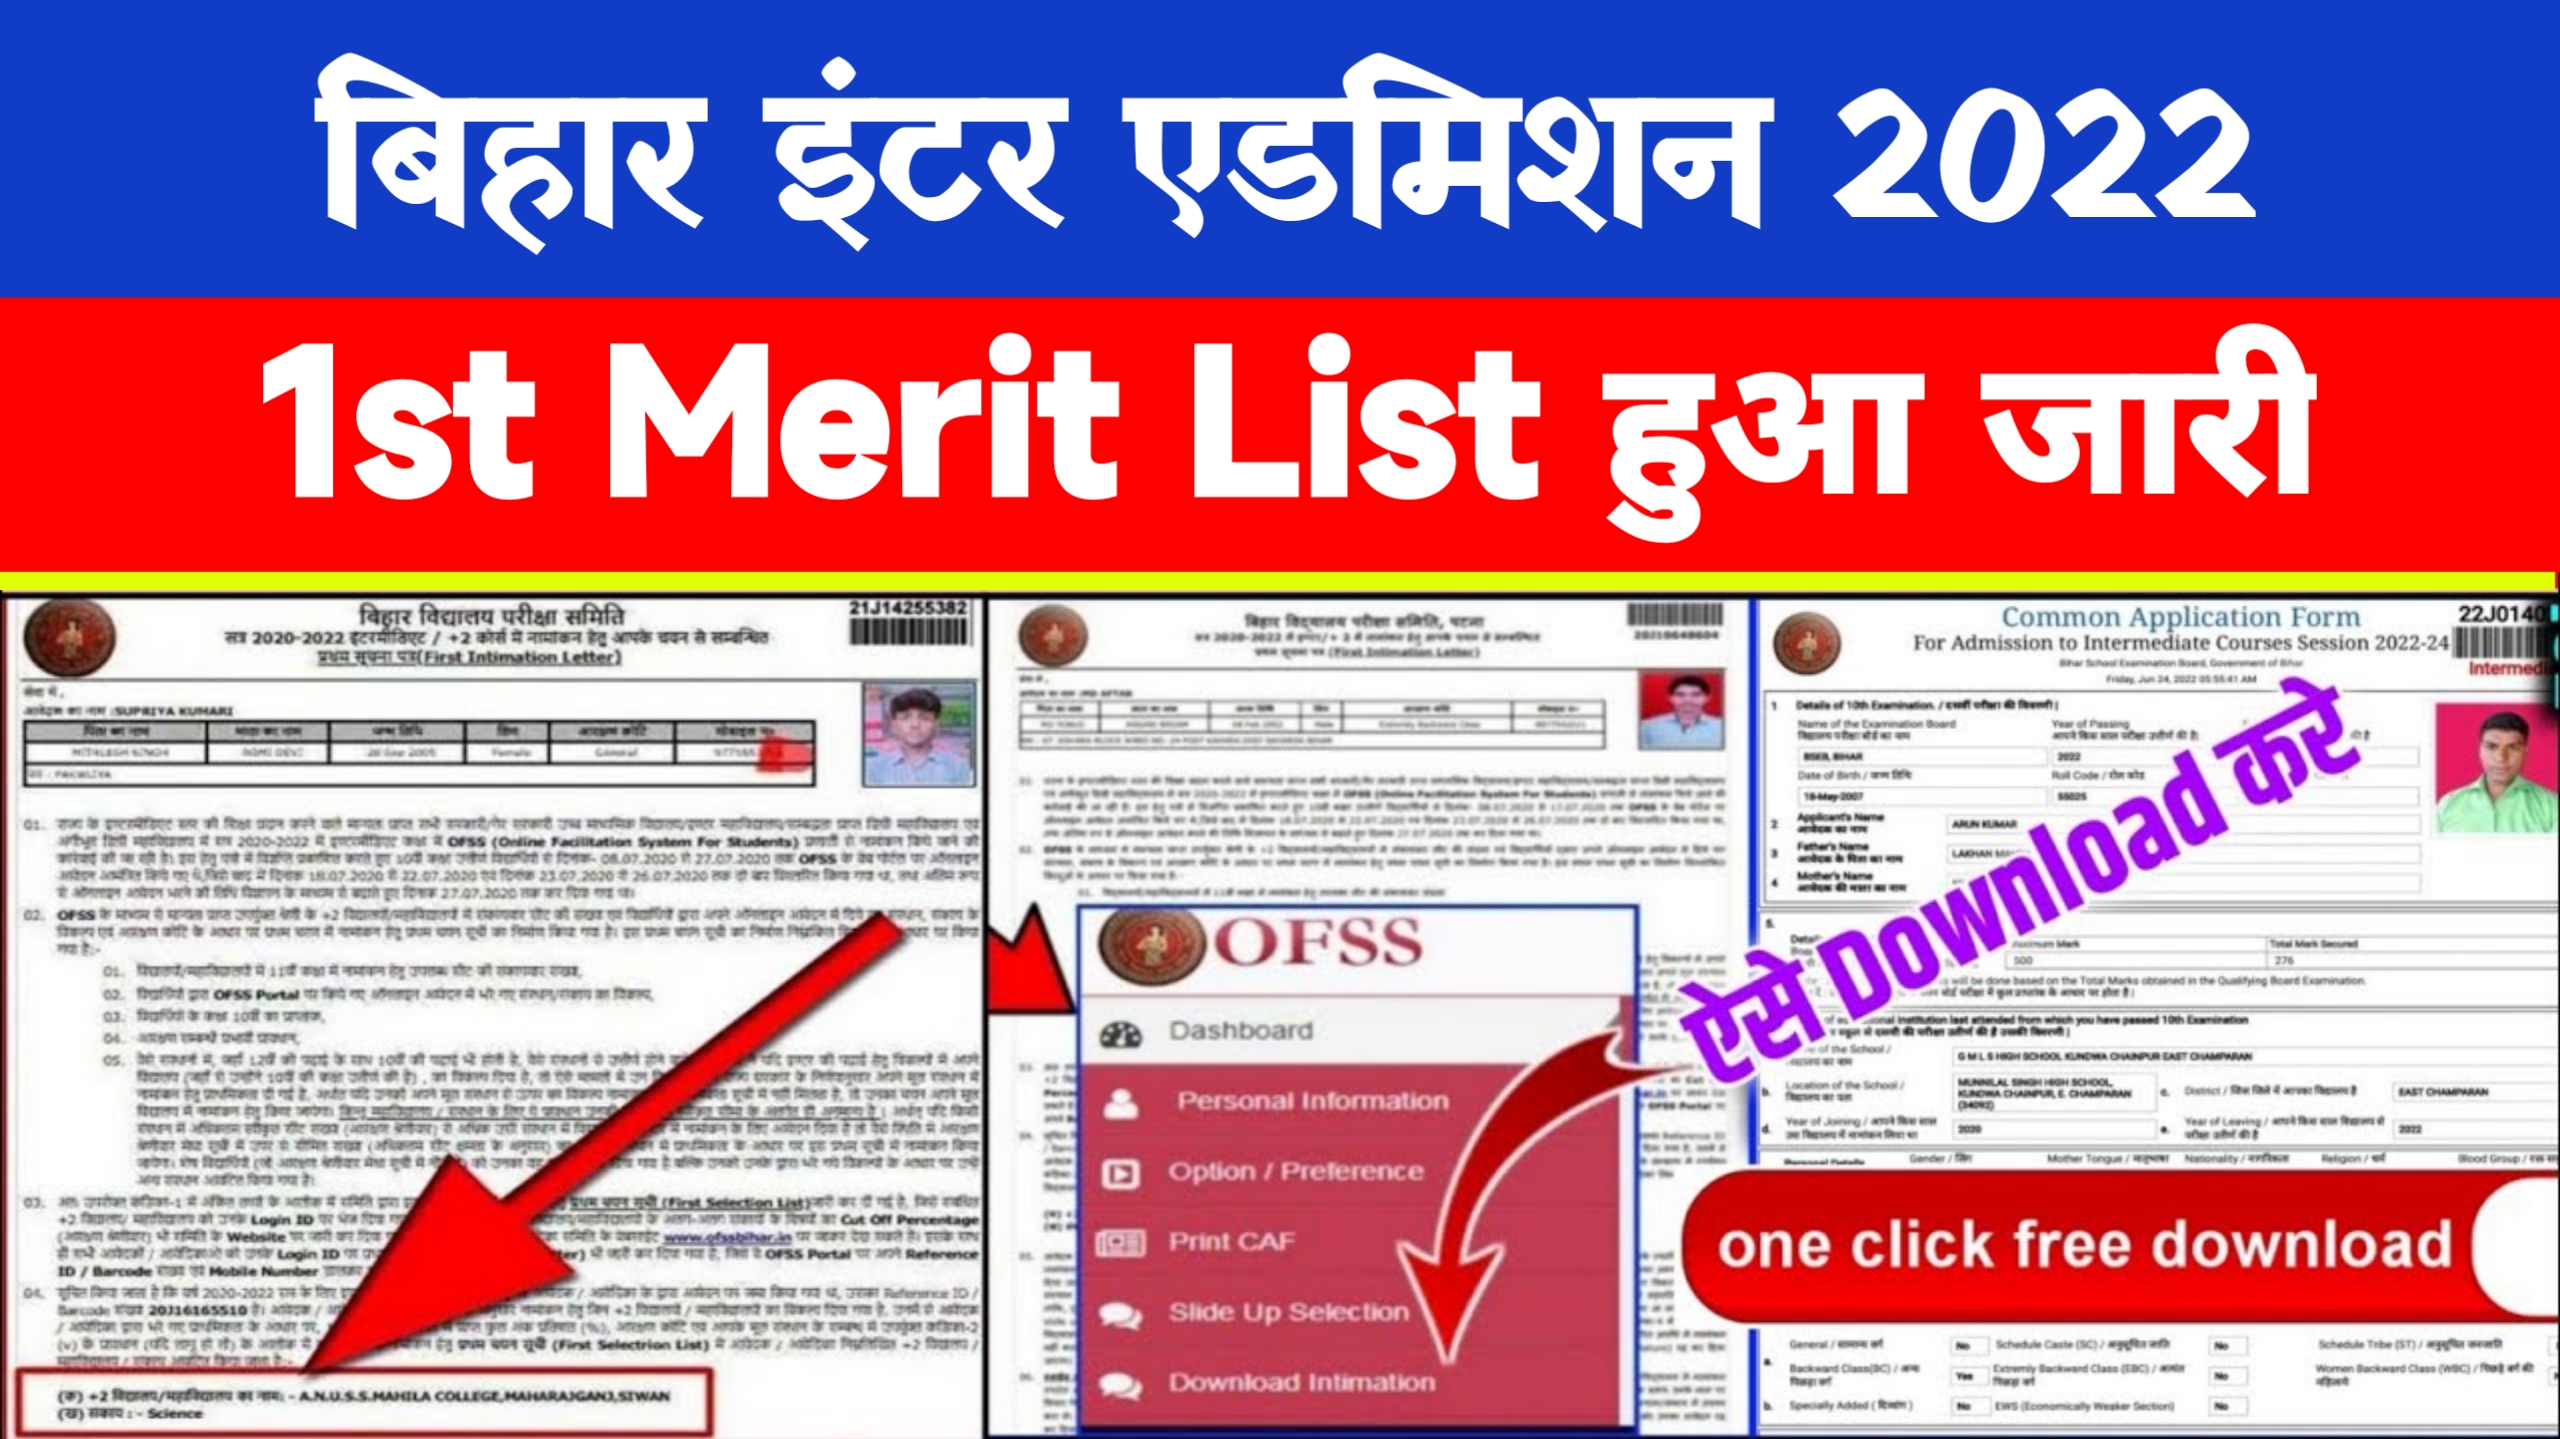 ofssbihar.in Bihar Board 11th First Merit List 2022 Download ~ @Ofss